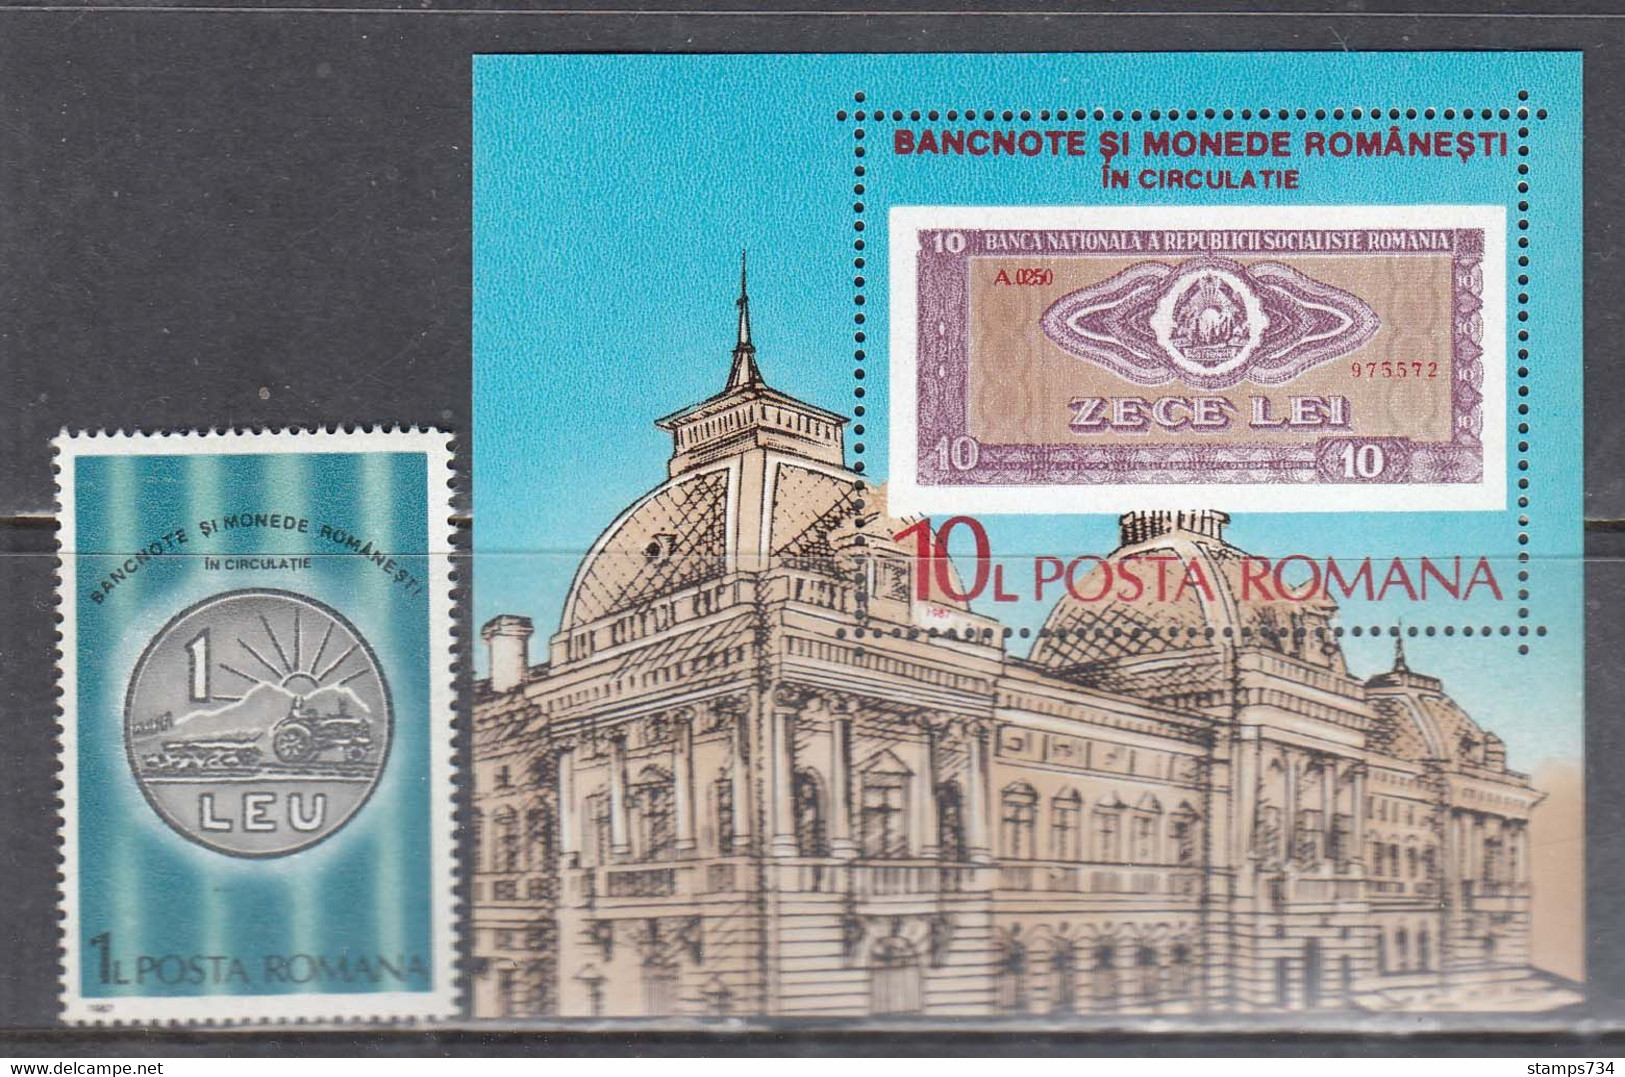 Romania 1987 - Circulating Romanian Banknotes And Coins, Mi-Nr. 4339+Bl. 233, MNH** - Ungebraucht